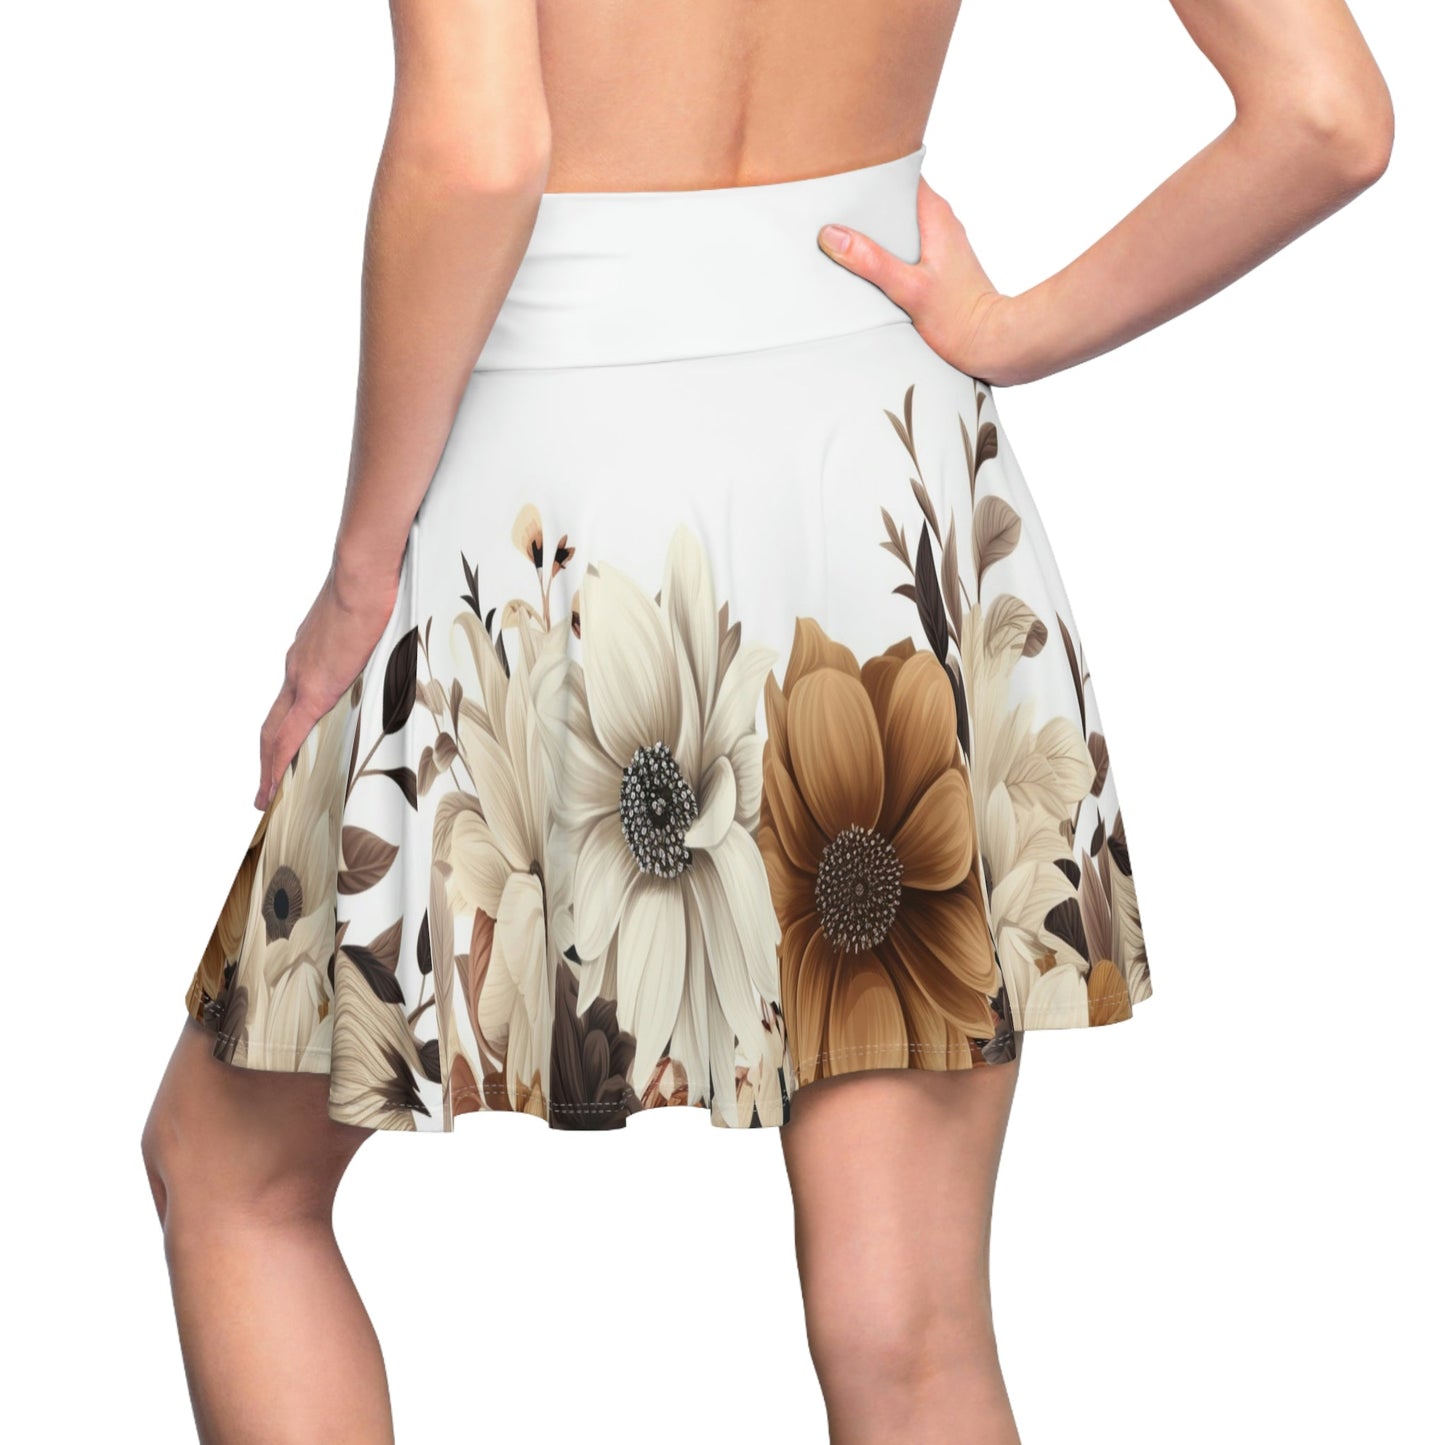 M / 4 oz. 1 Brown Flowered Women’s Skater Skirt by Neduz